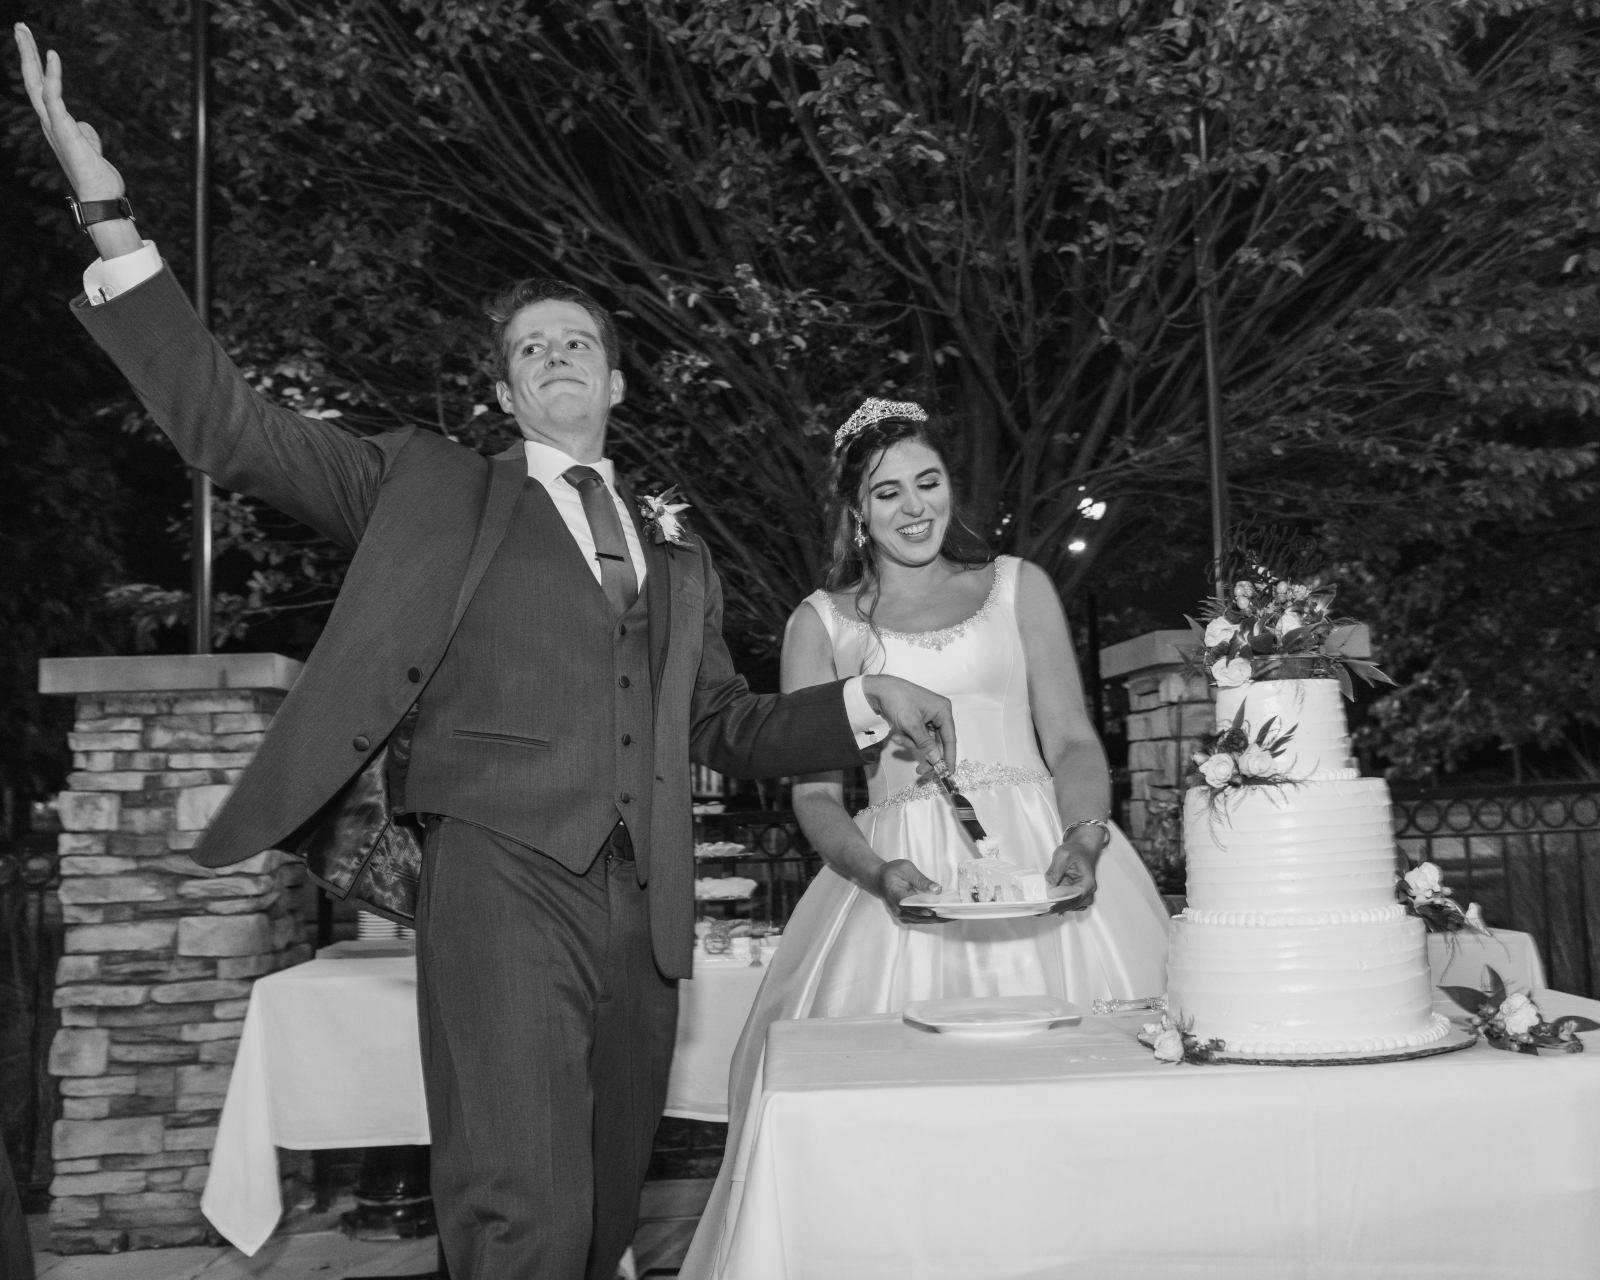 Bride and groom cutting the cake, cake cutting, fun wedding photo, smiling, laughing, black and white, sweet wedding reception at Crocker Park, Westlake OH